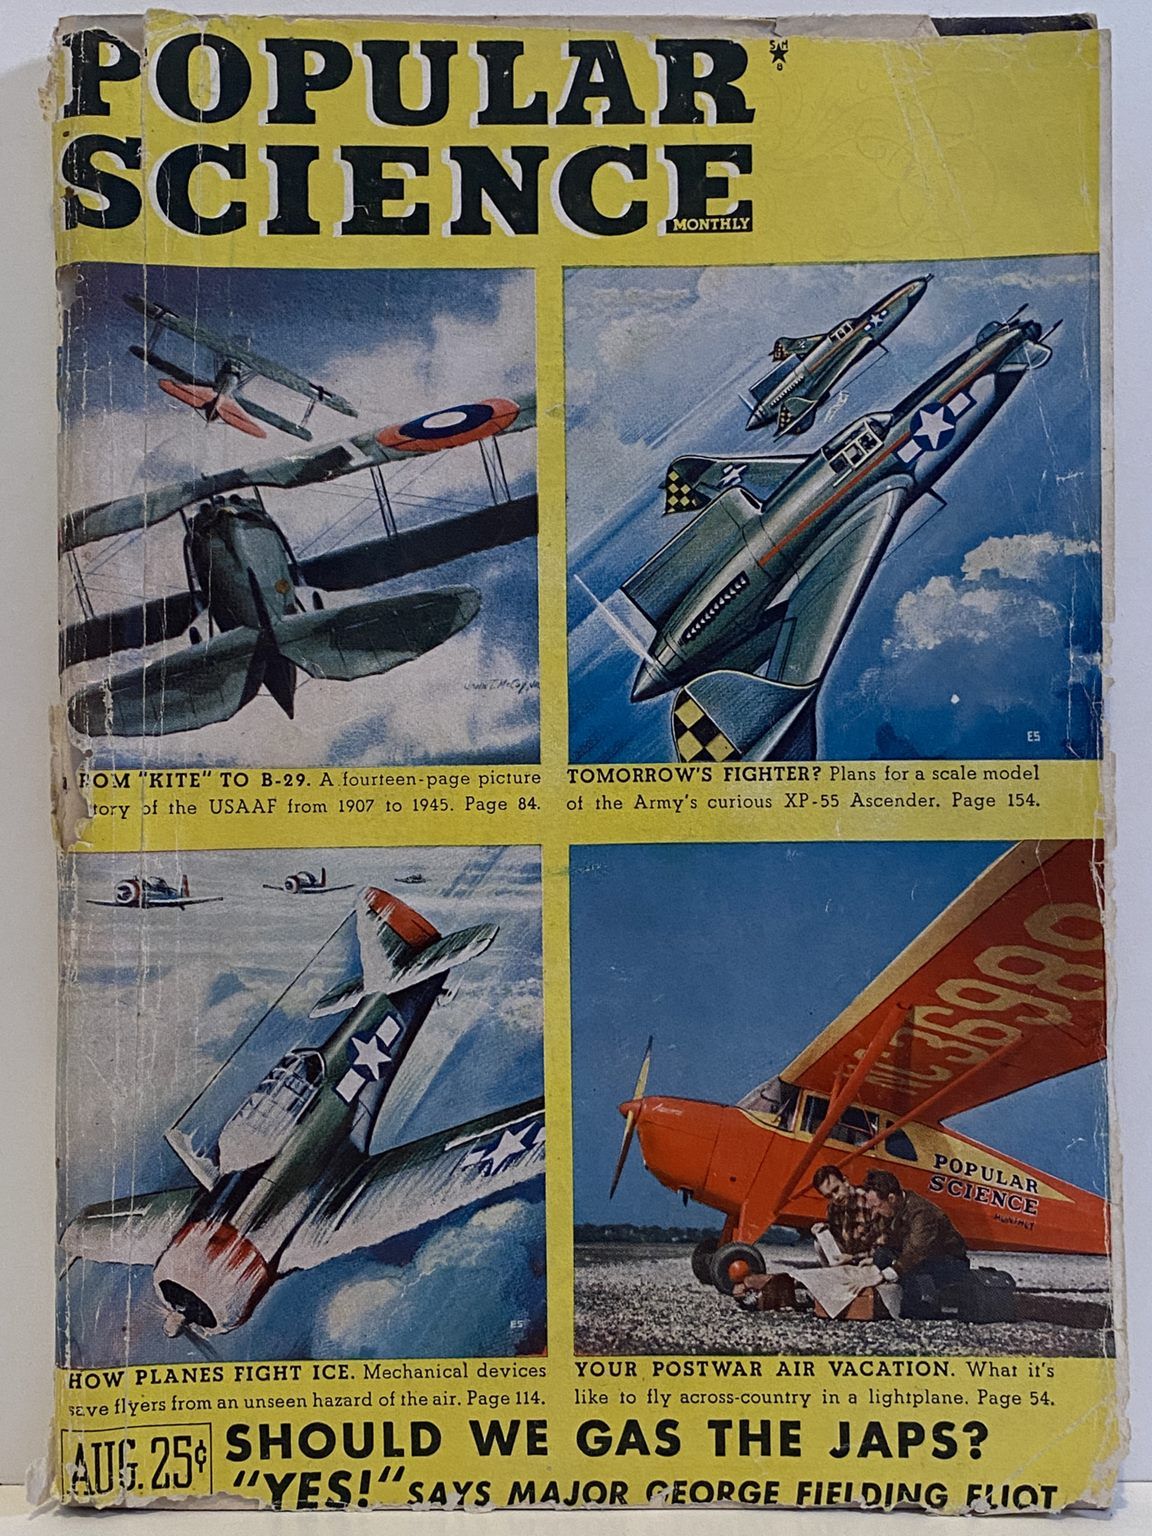 VINTAGE MAGAZINE: Popular Science, Vol. 147, No. 2 - August 1945